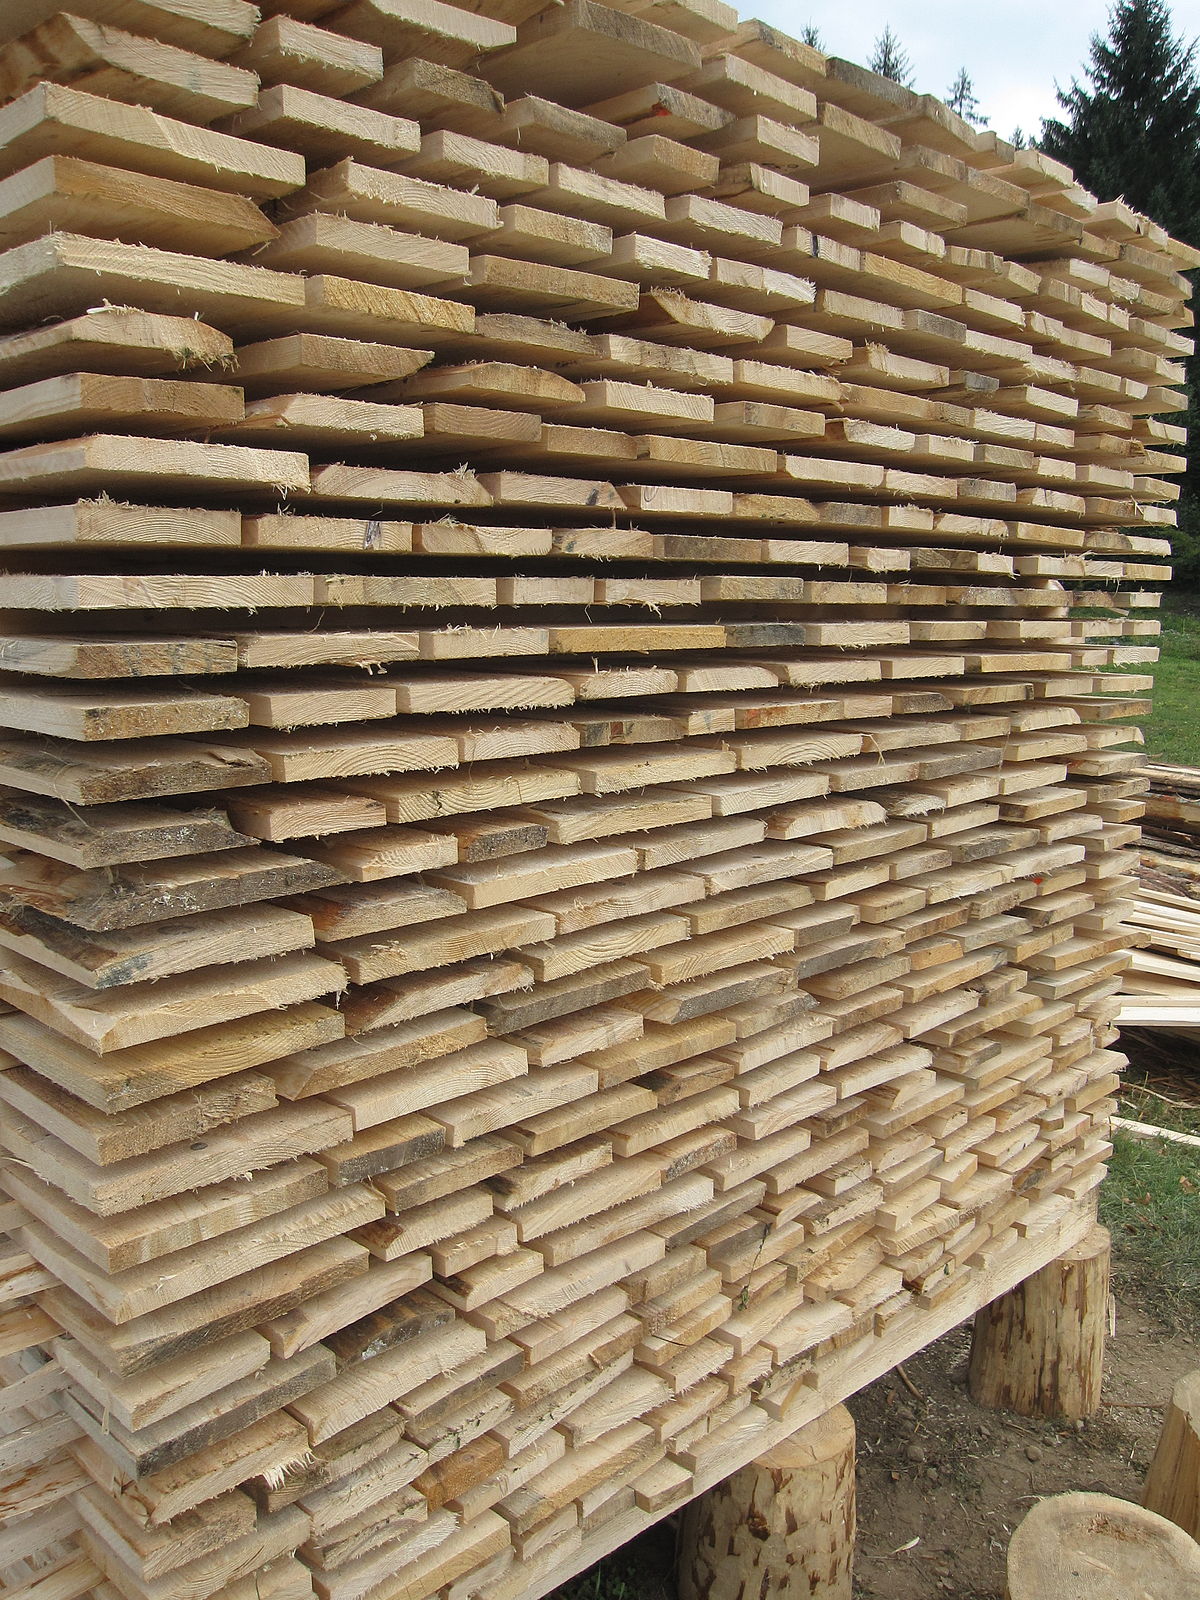 Wood drying - Wikipedia